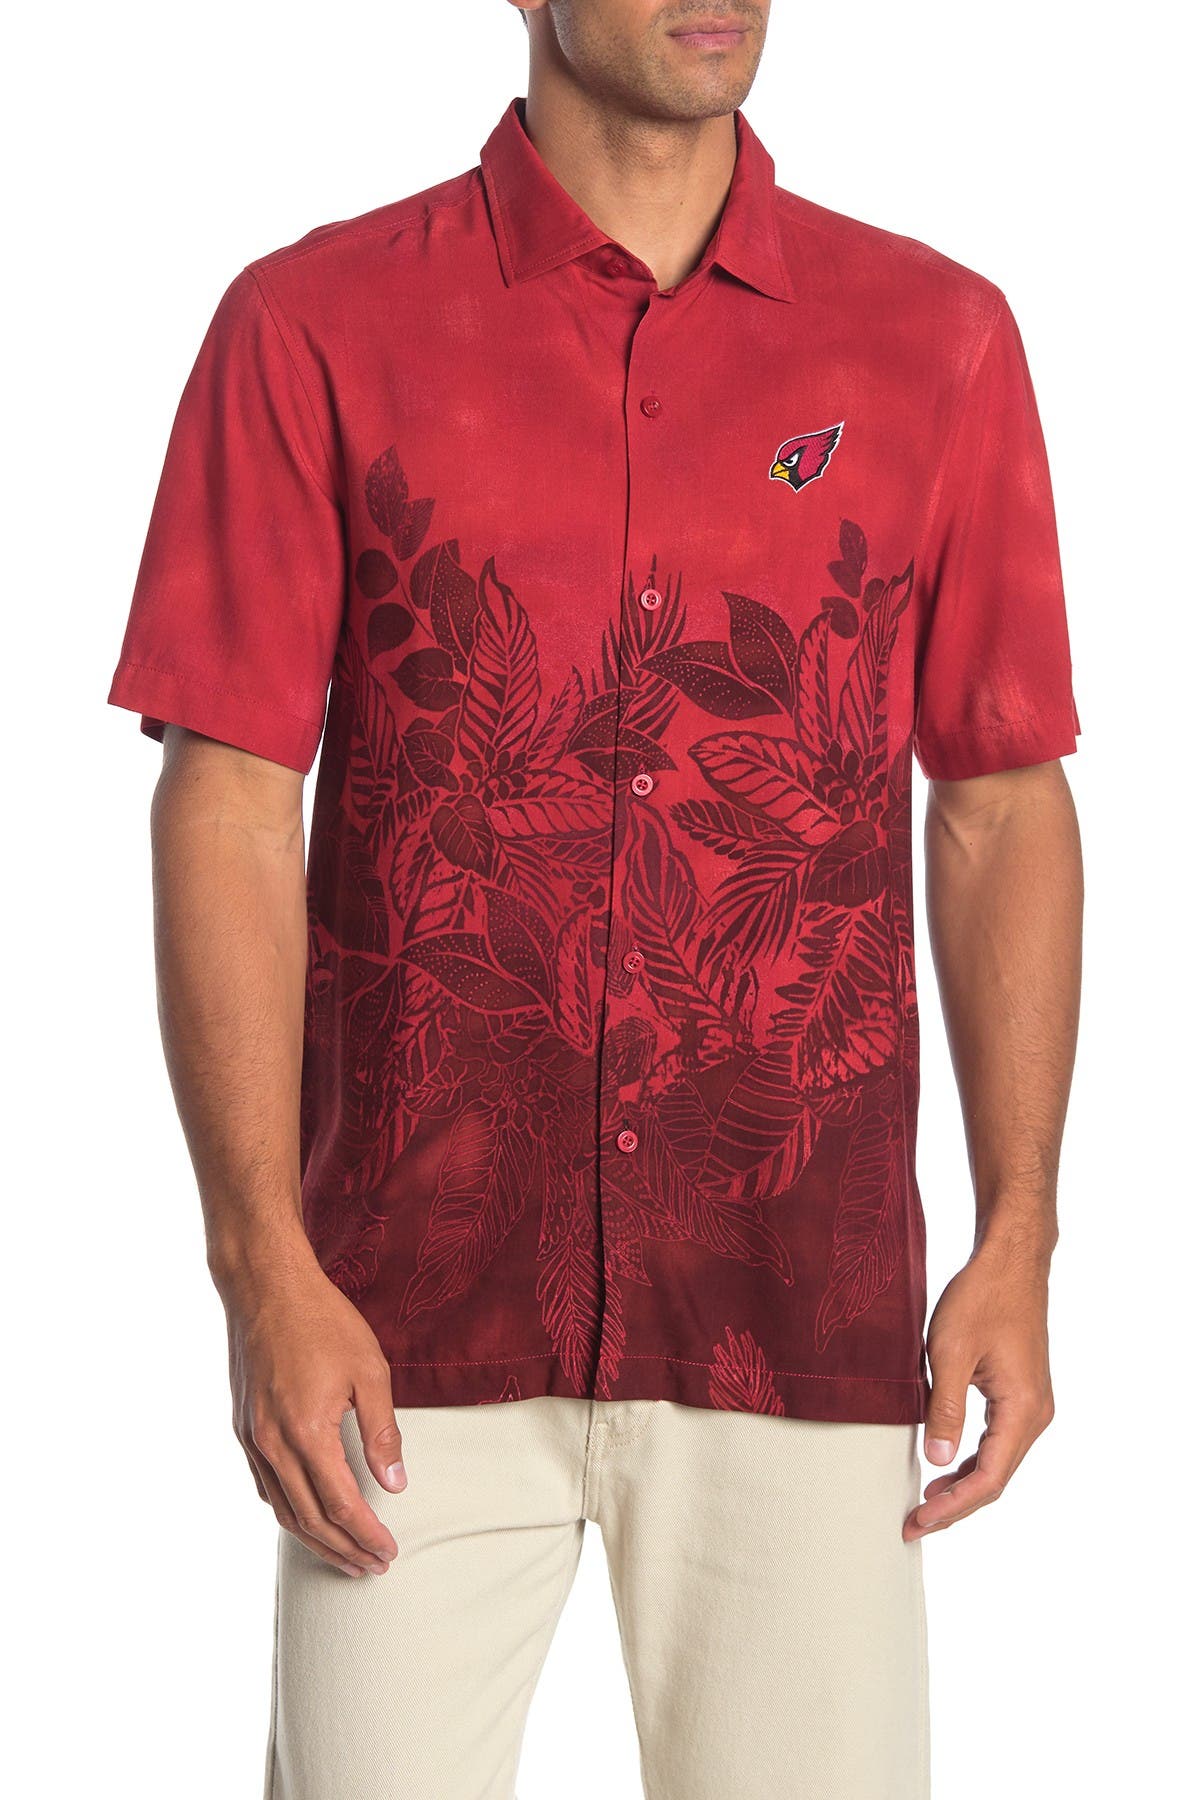 tommy bahama nfl shirts